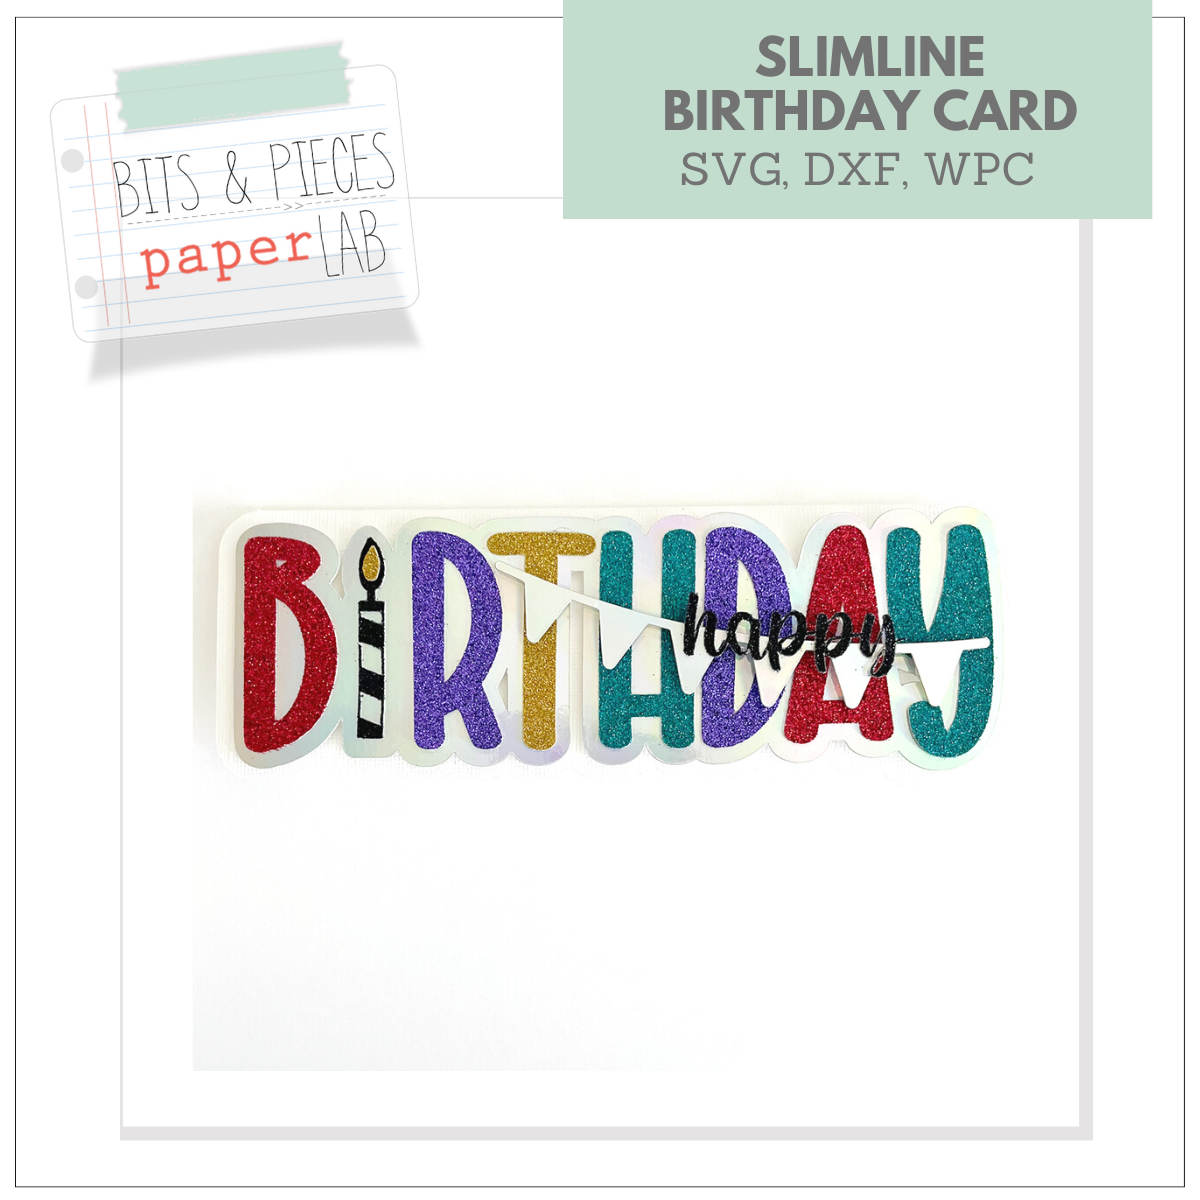 Slimline Birthday Card SVG